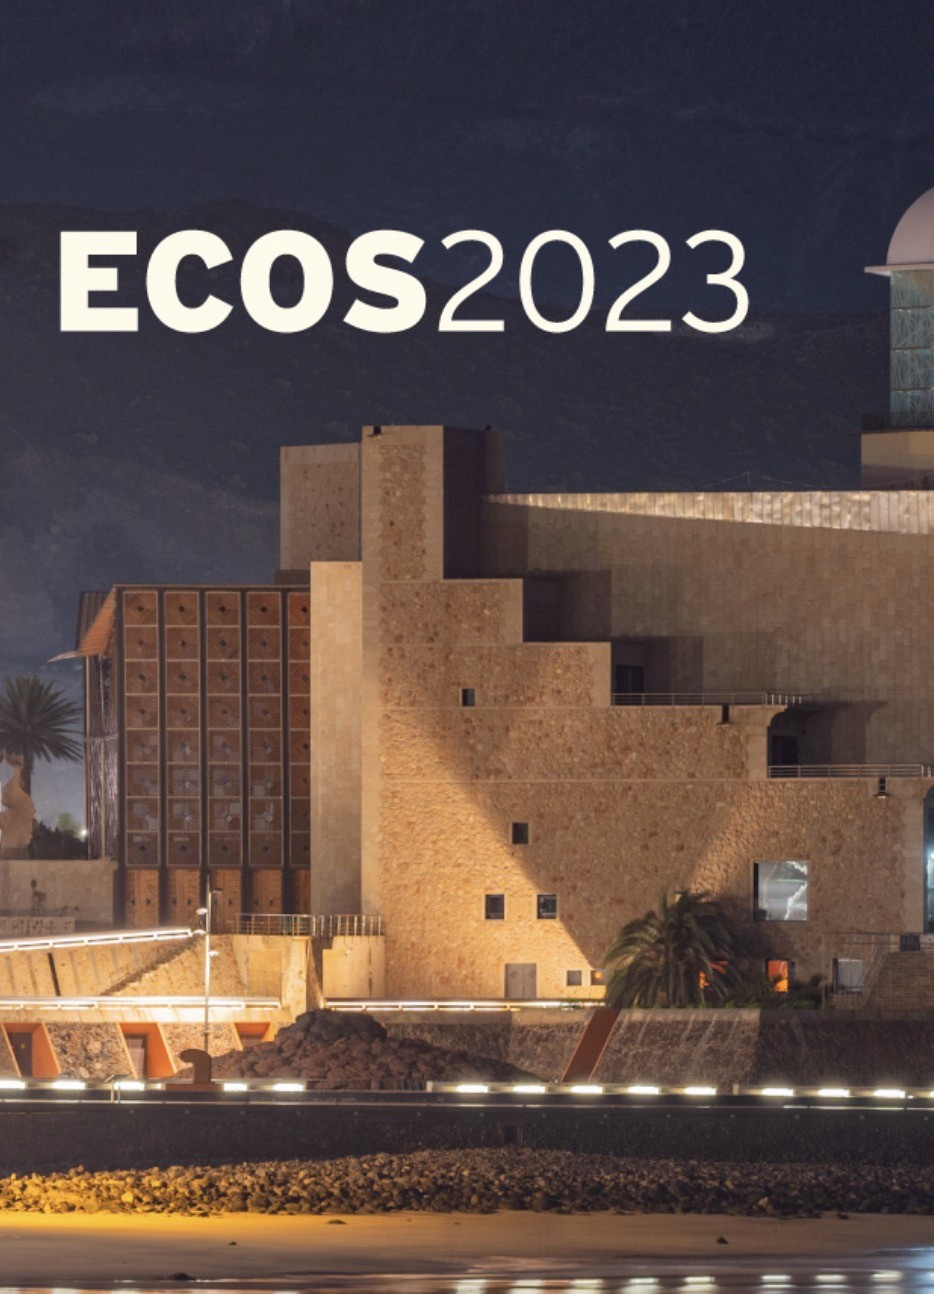 ECOS 2023 logo